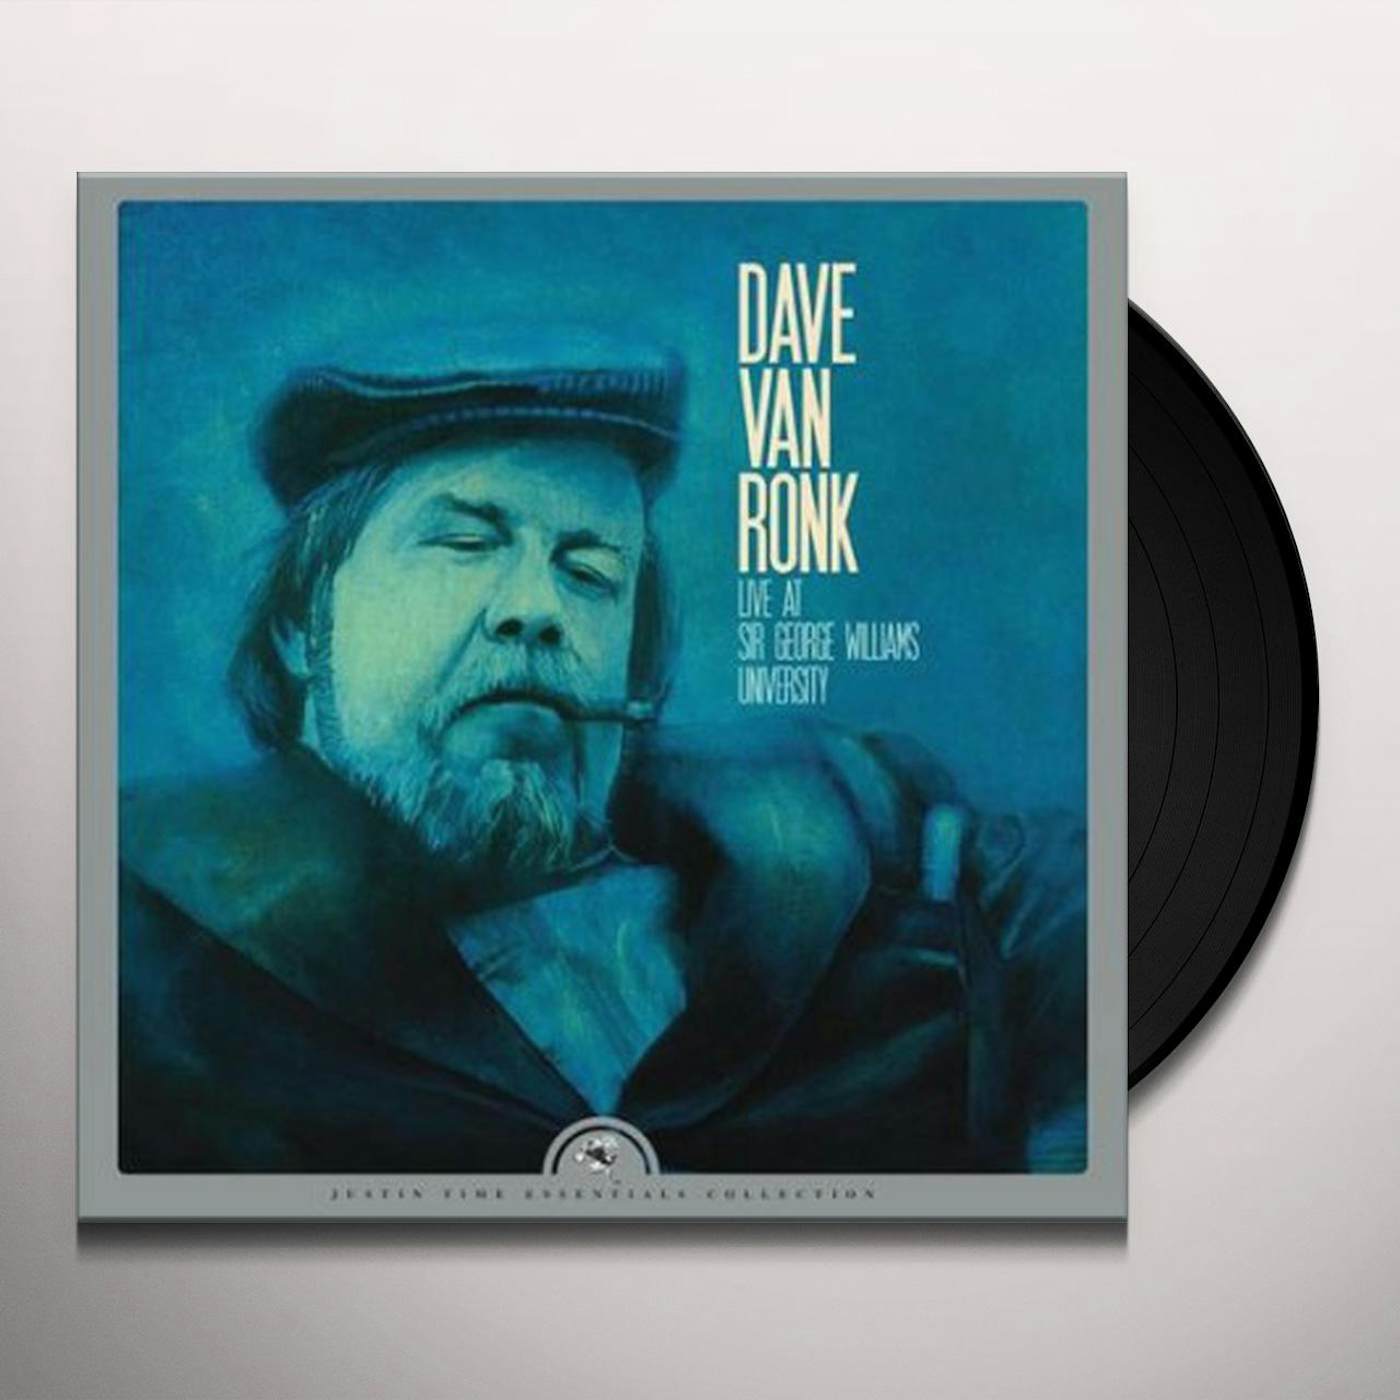 Dave Van Ronk Live At Sir George Williams University Vinyl Record